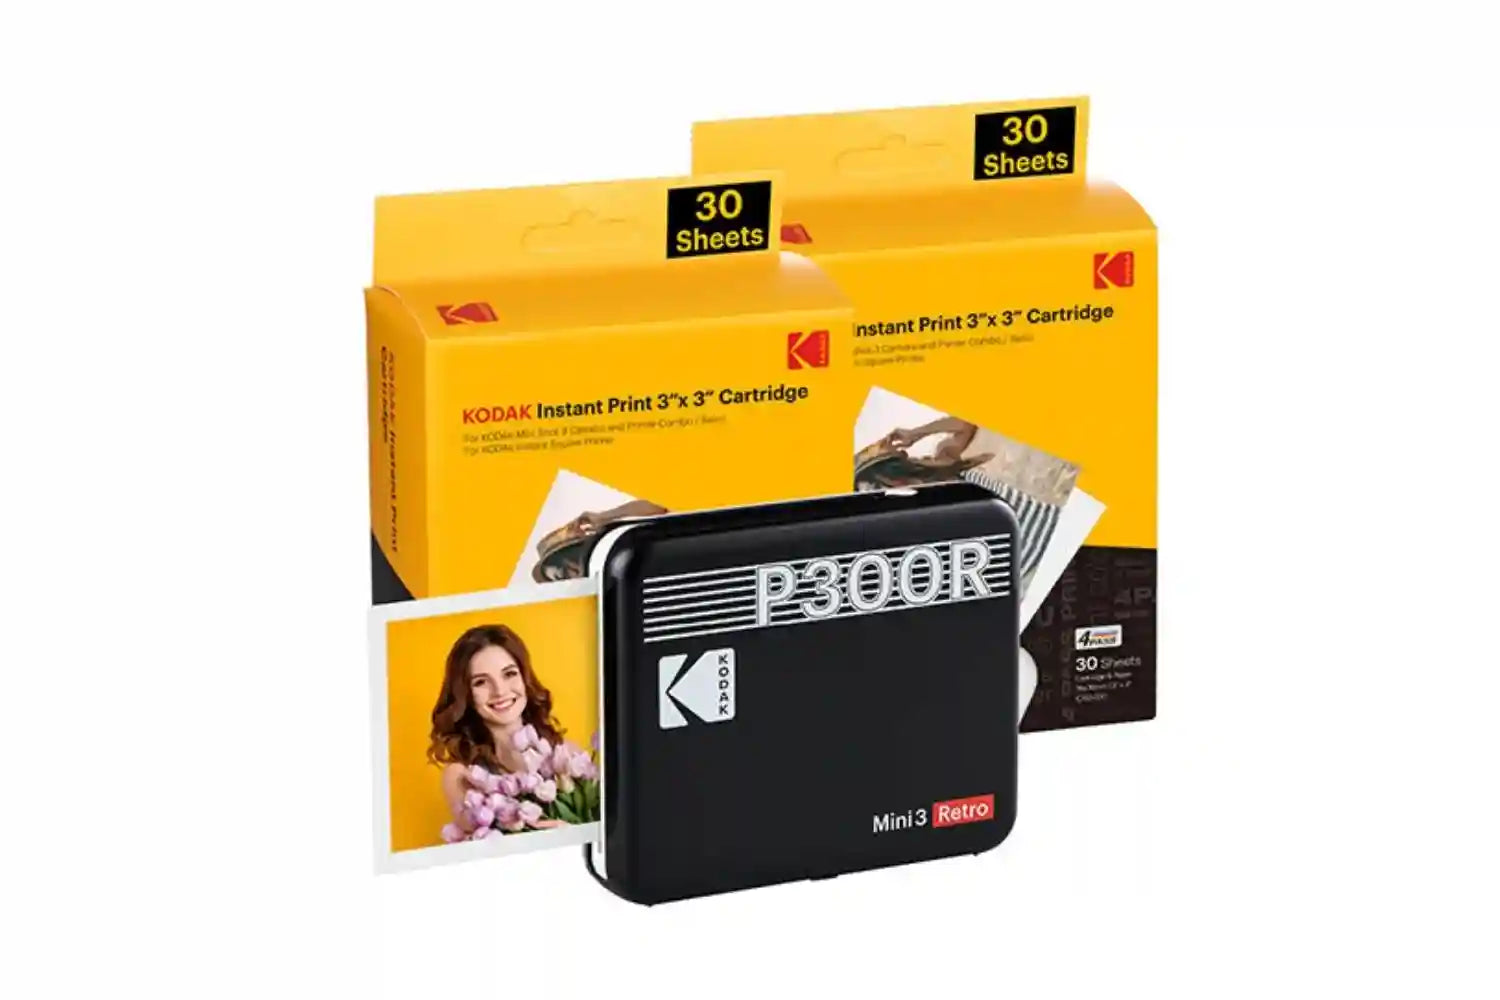 Best Portable Instant Polaroid Photo & Picture Printer — Mini 2